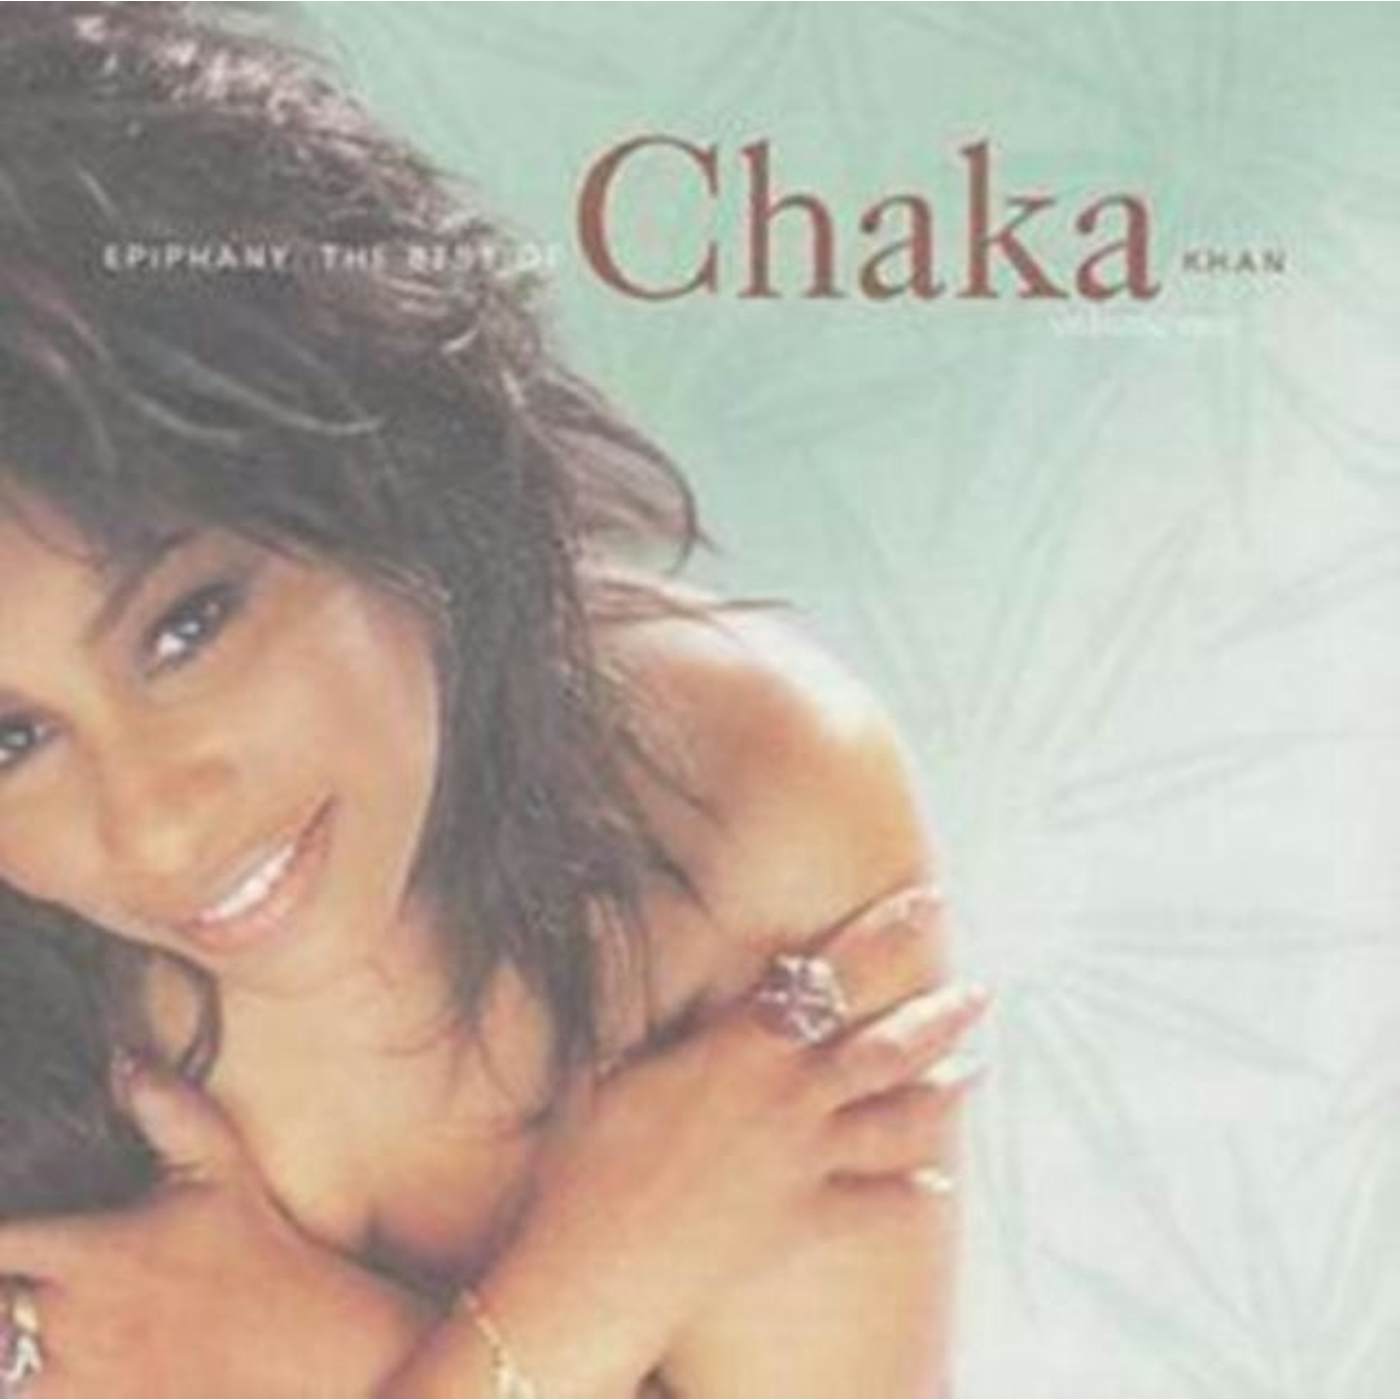 Chaka Khan CD - Epiphany - The Best Of - Volume One